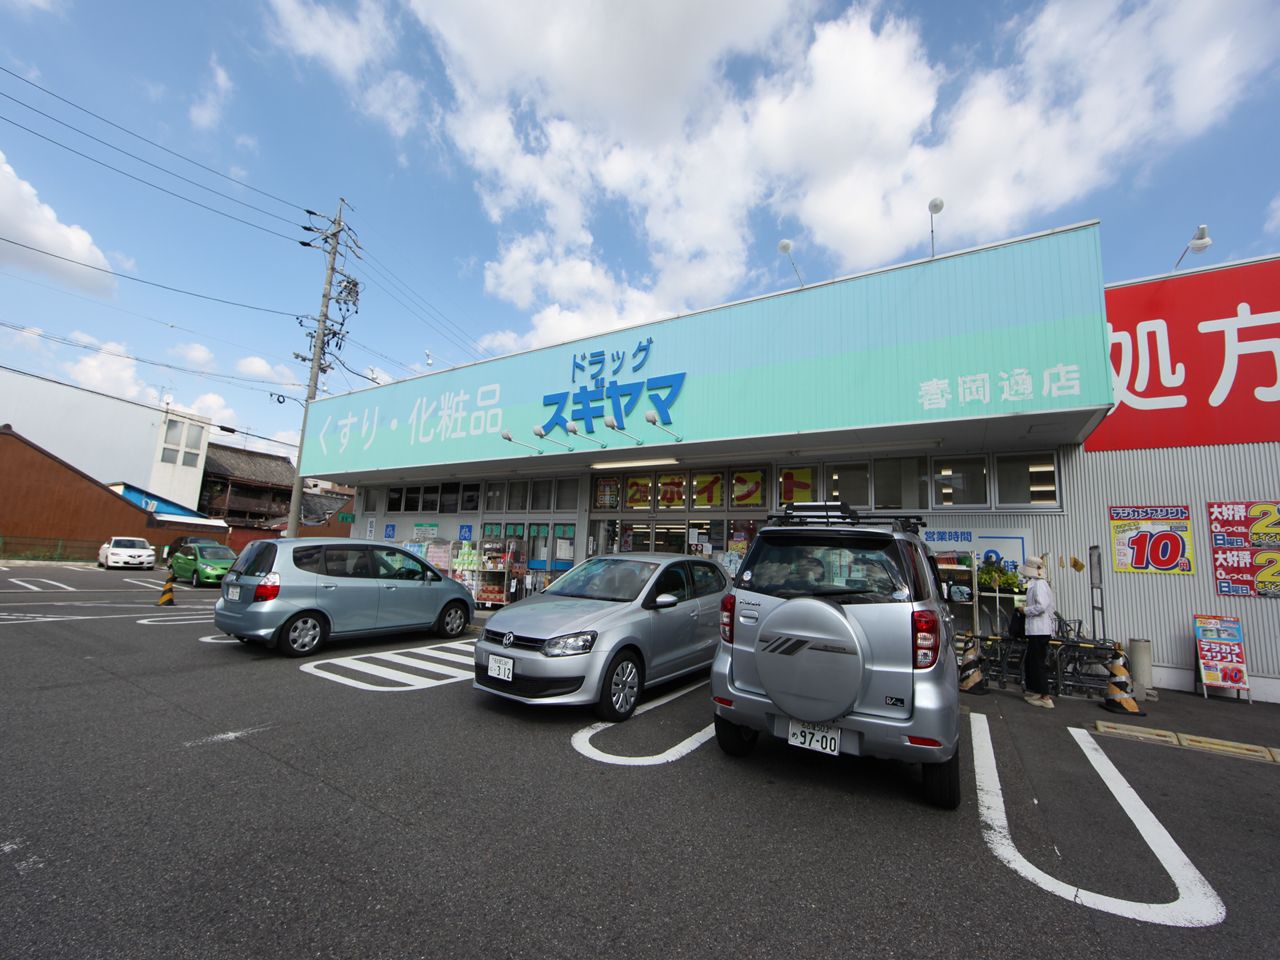 Dorakkusutoa. Drag Sugiyama Haruokatori shop 538m until (drugstore)